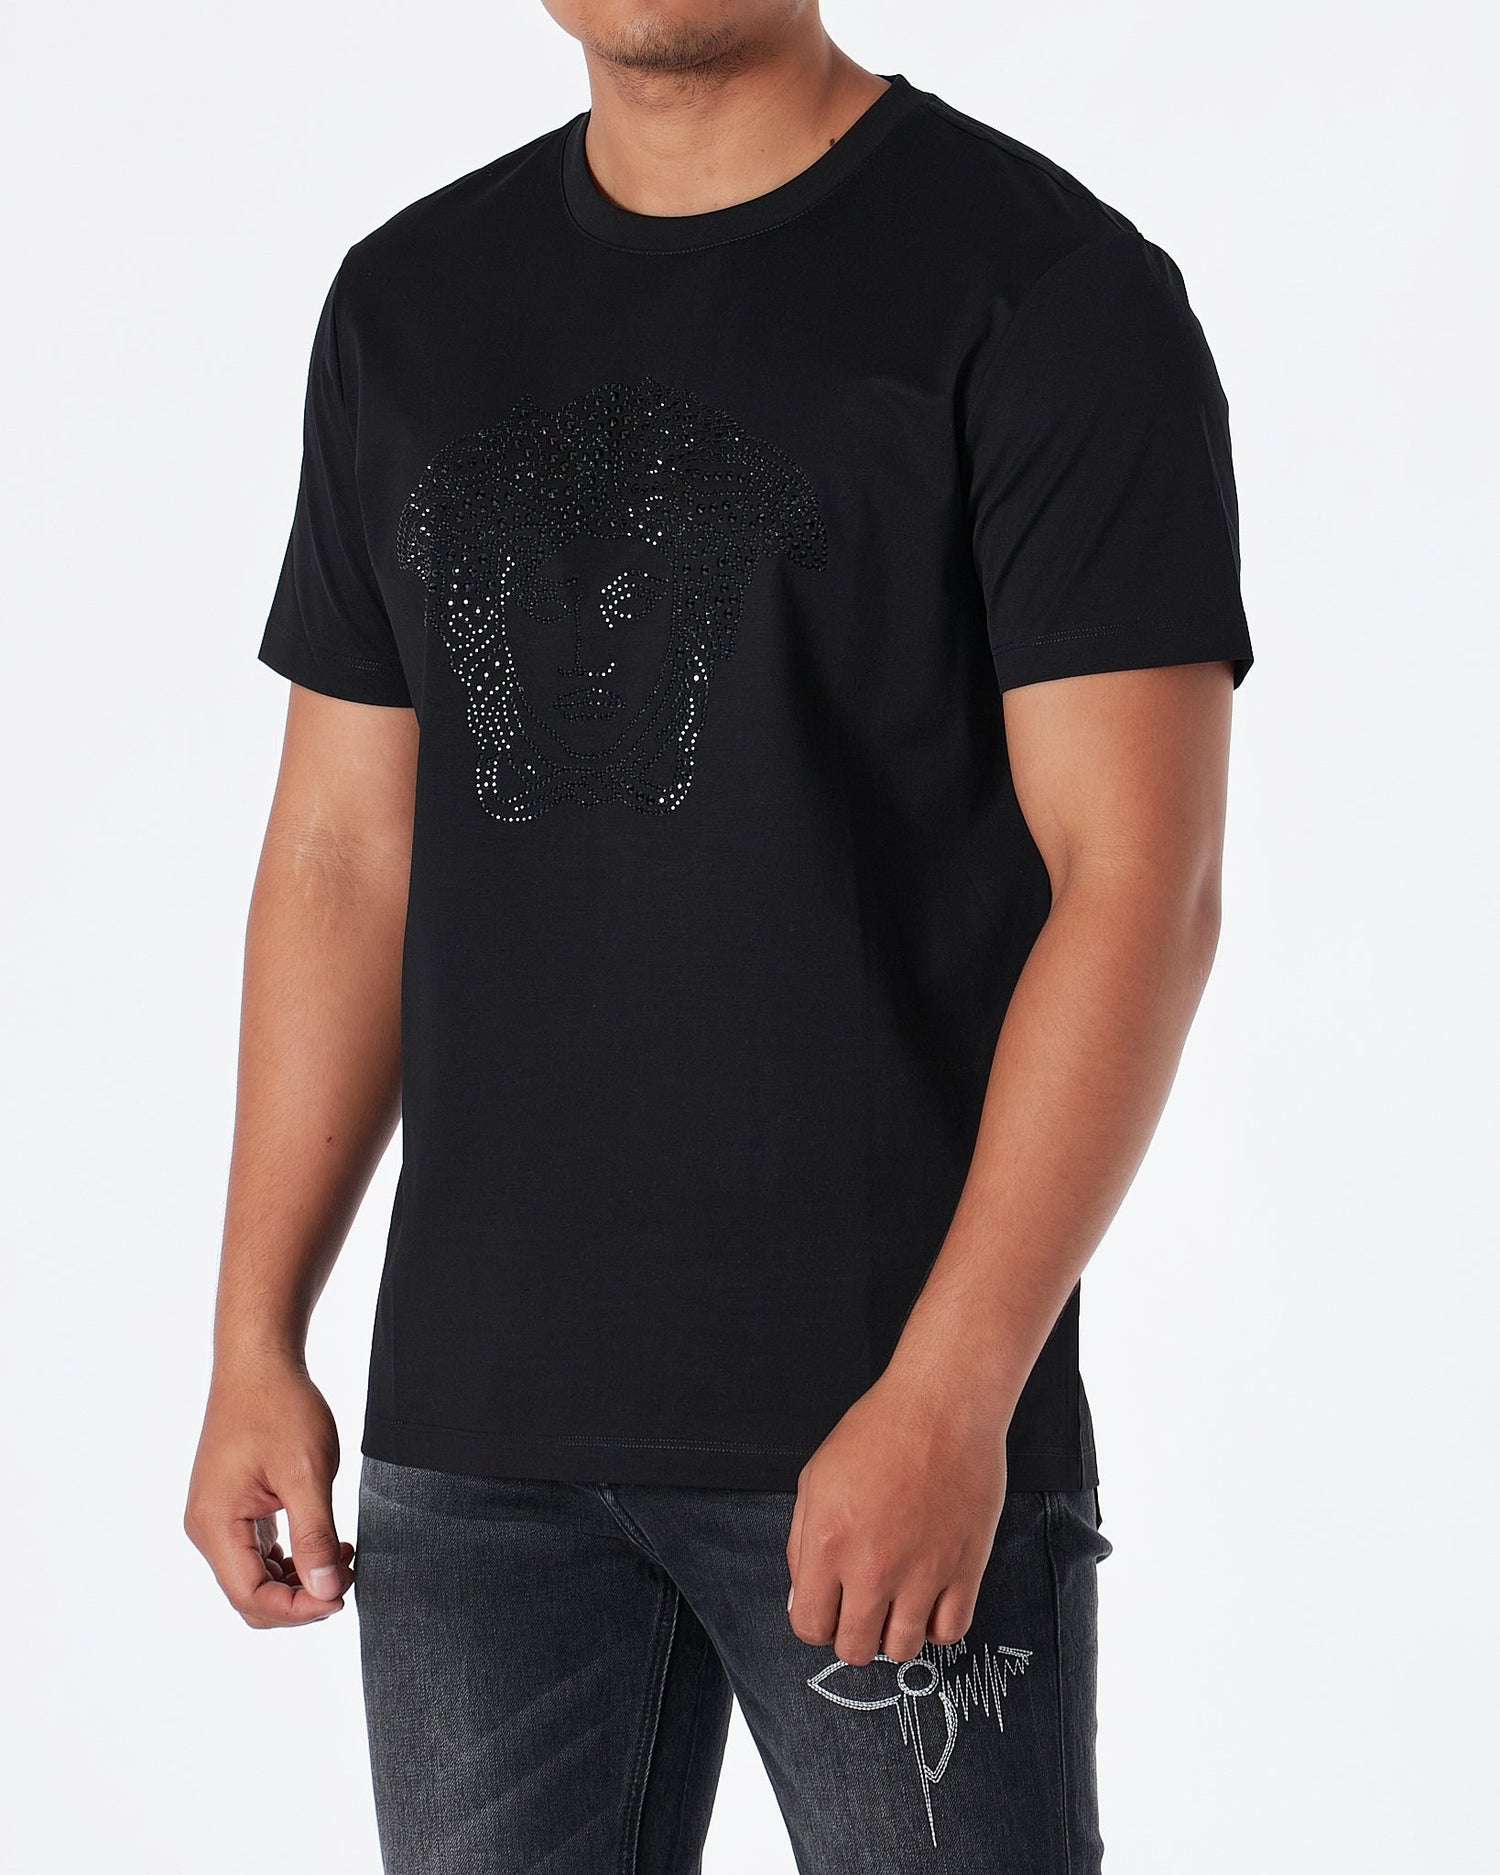 MOI OUTFIT-Rhinestone Medusa Printed Men T-Shirt 54.90